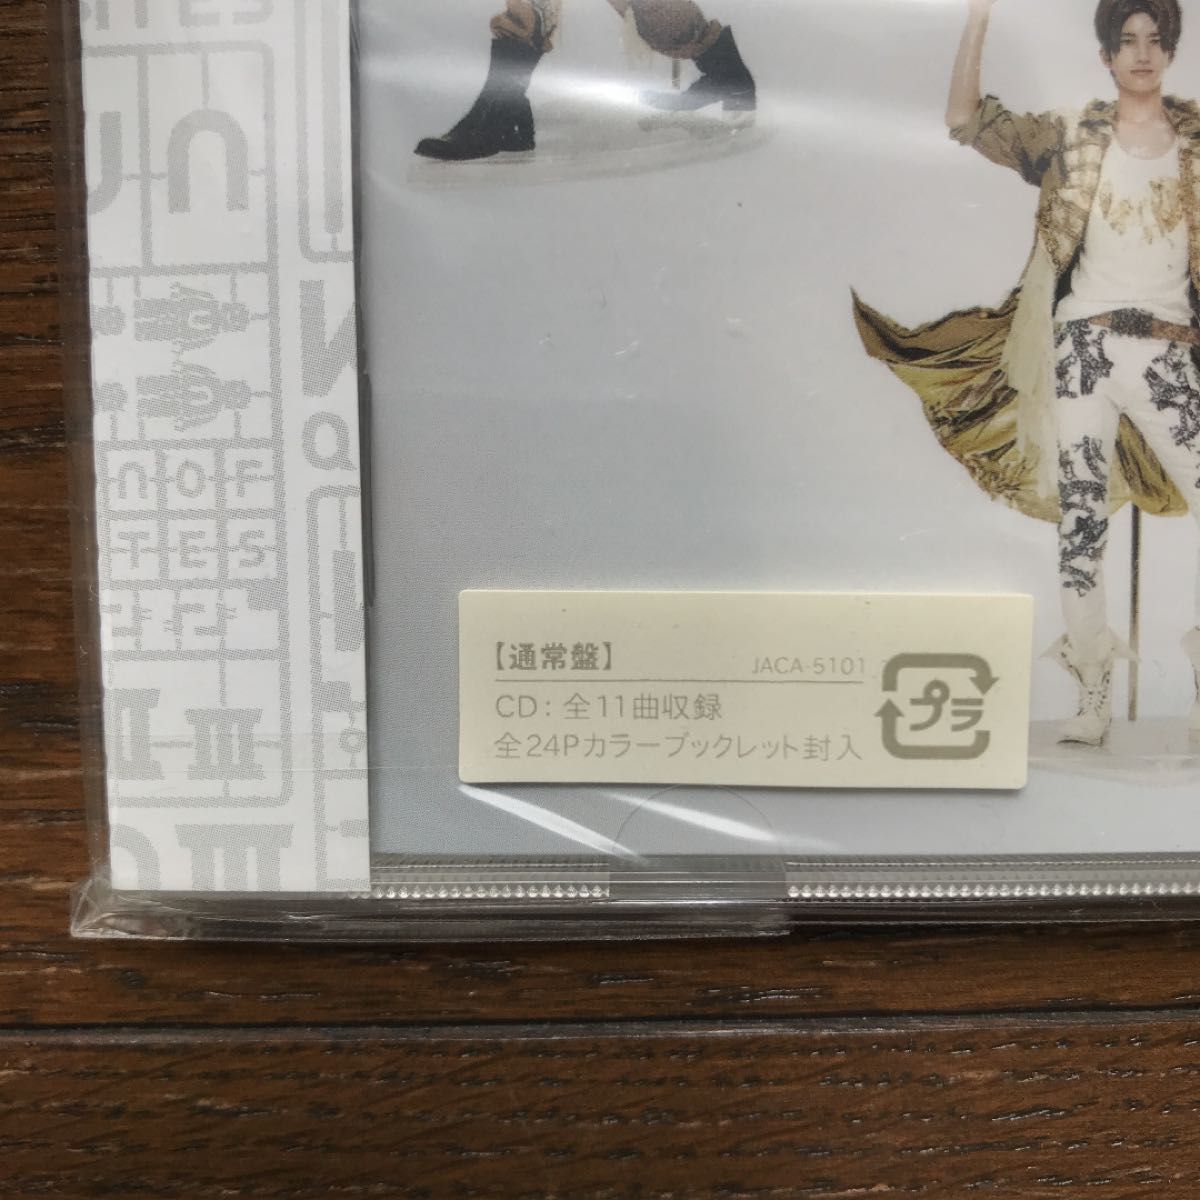 KAT-TUN 3 -QUEEN OF PIRATES-/CD